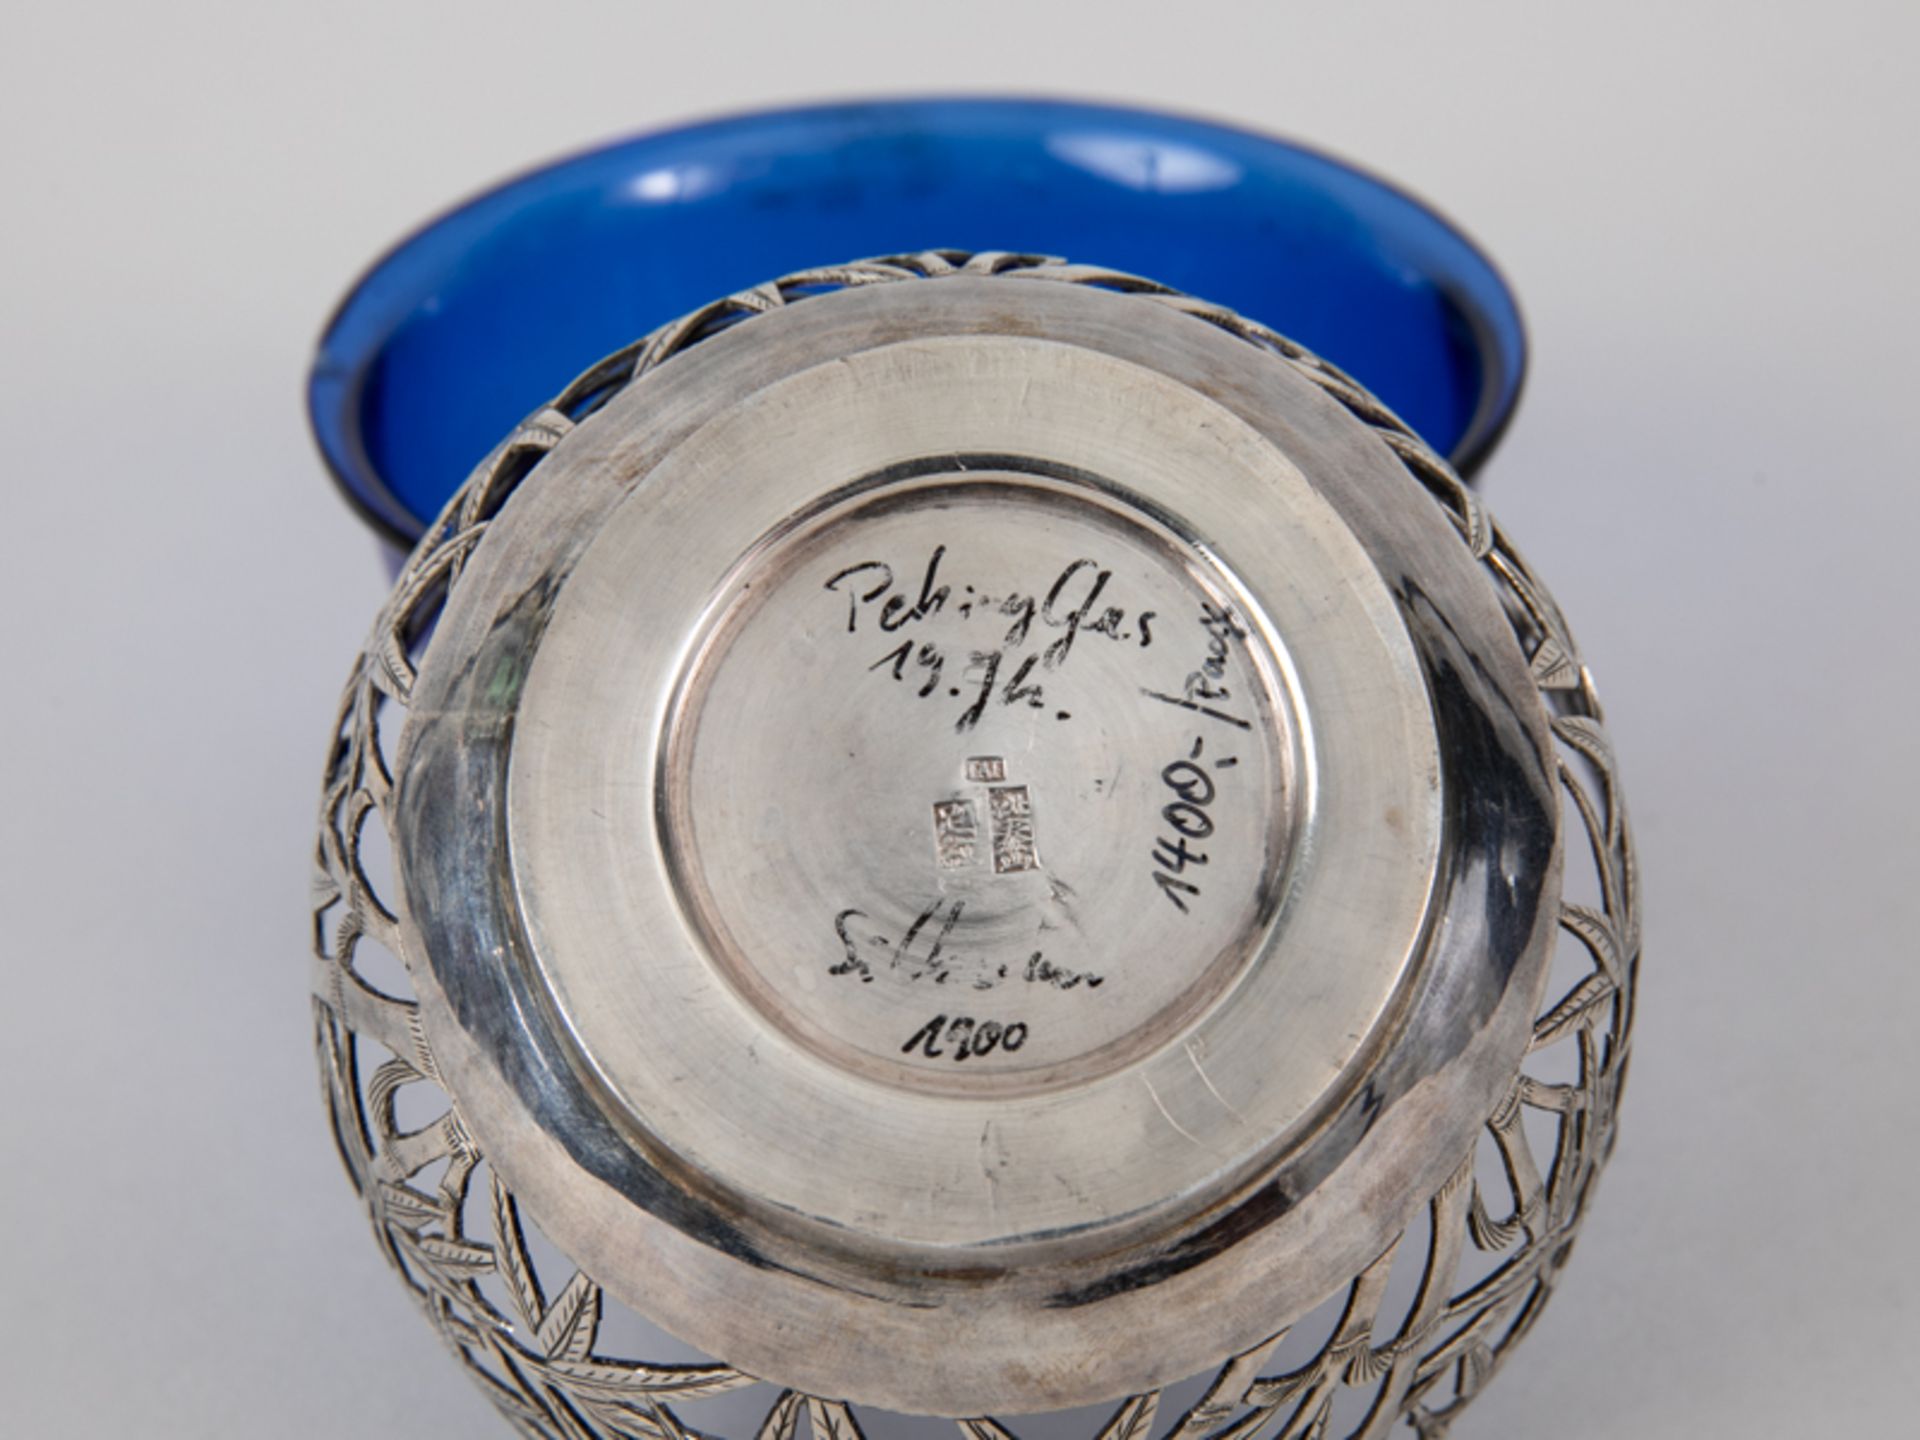 Pekingglas-Schale + Silber, China, 18. Jh./ um 1900. Blaues Pekingglas (18. Jh.) und filigrane - Bild 3 aus 3